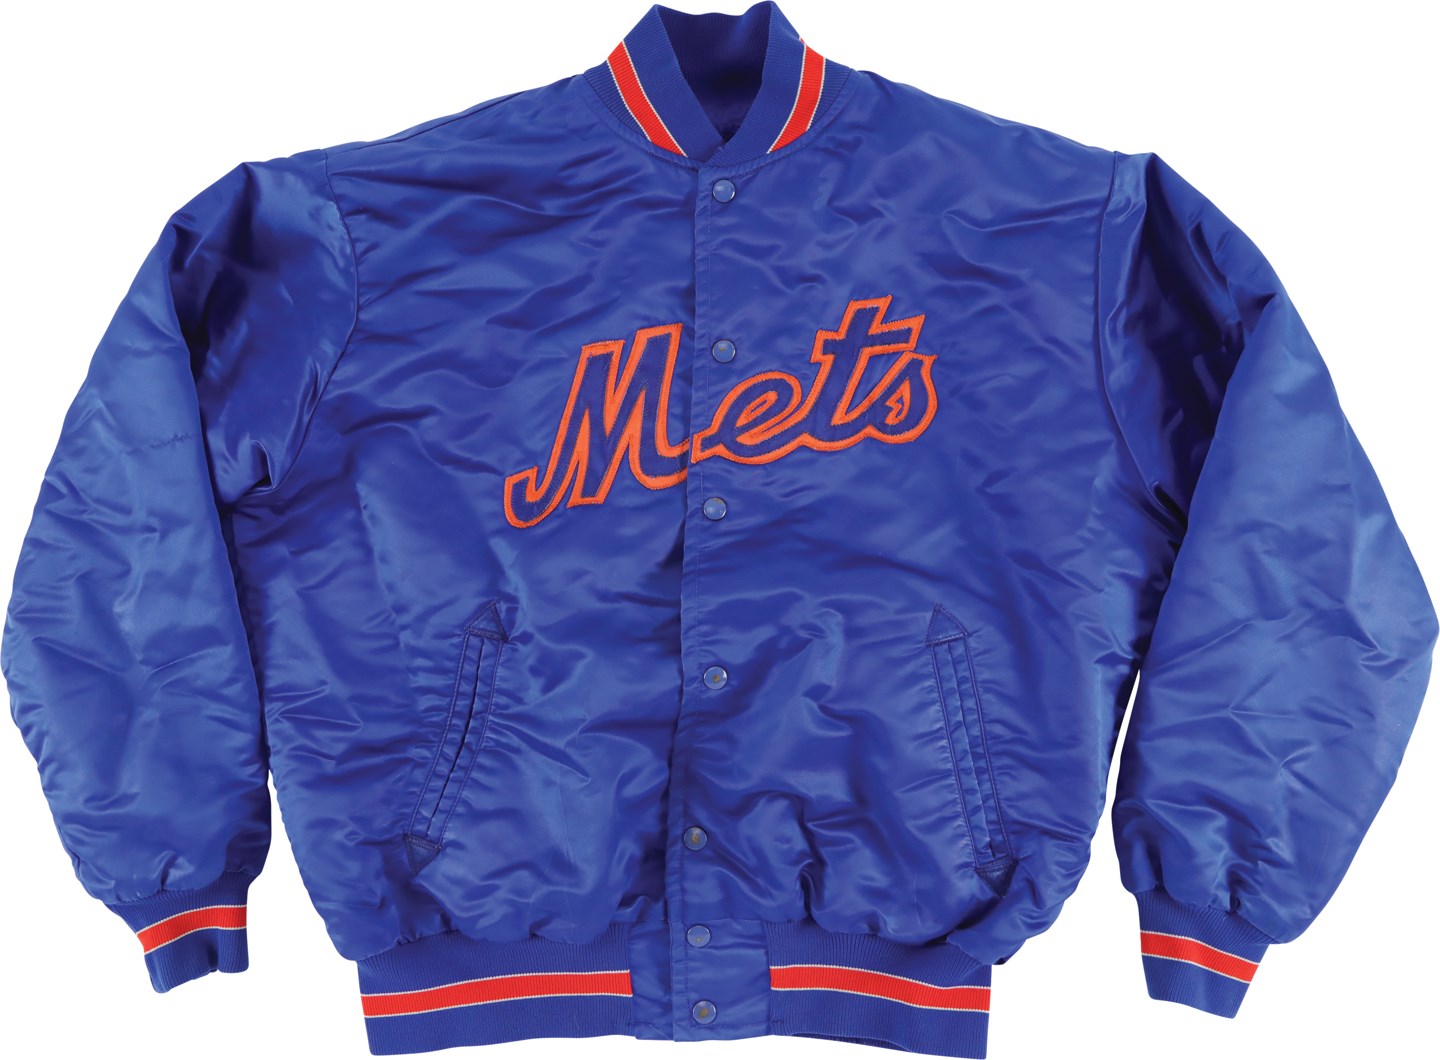 - Circa 1970s Ed Kranepool New York Mets Game Used Jacket